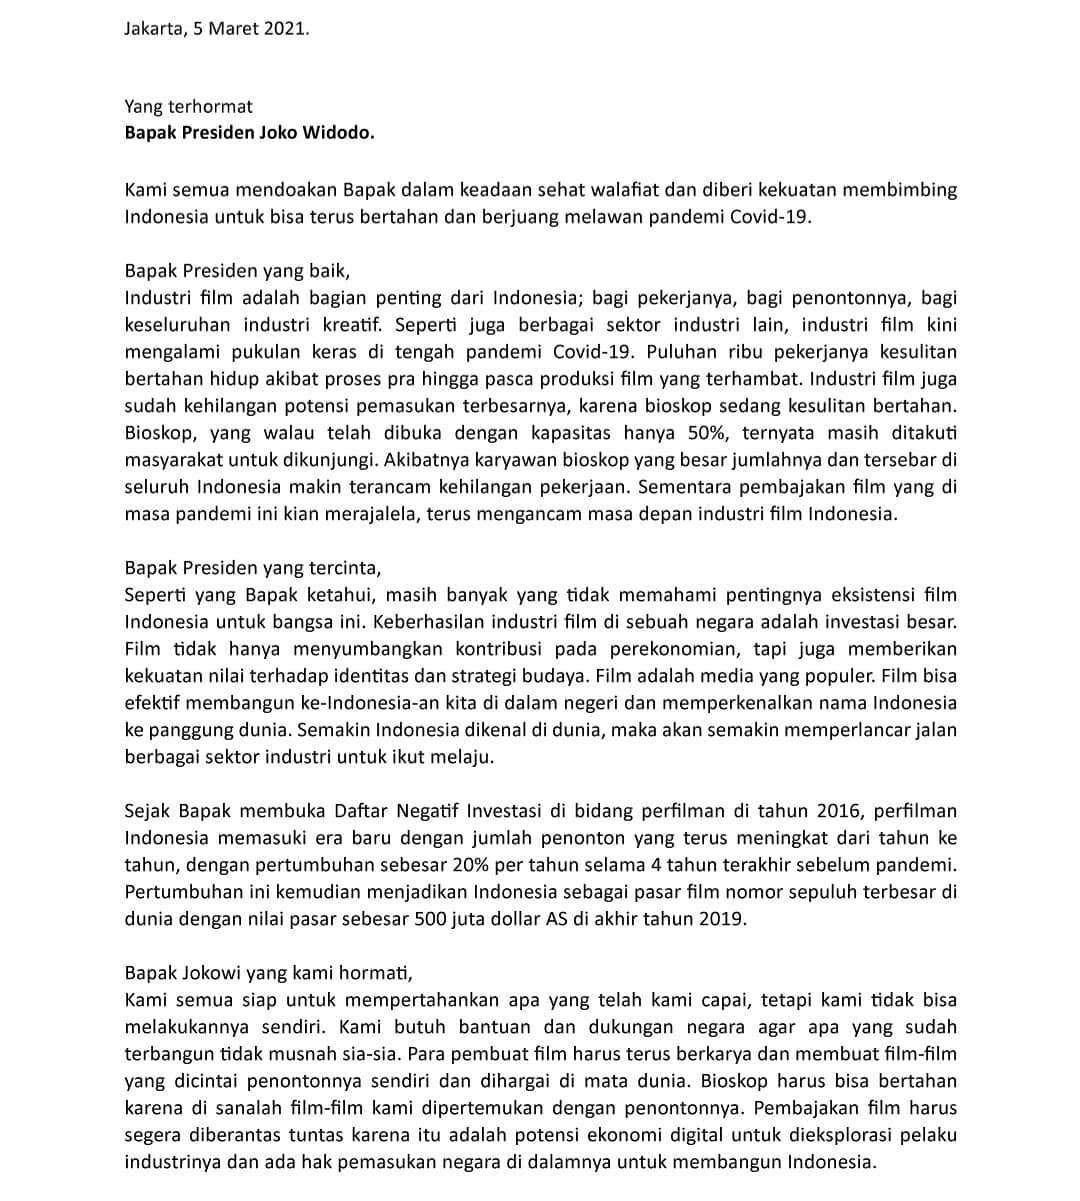 Surat terbuka pelaku industri perfilman Indonesia untuk Presiden Joko Widodo